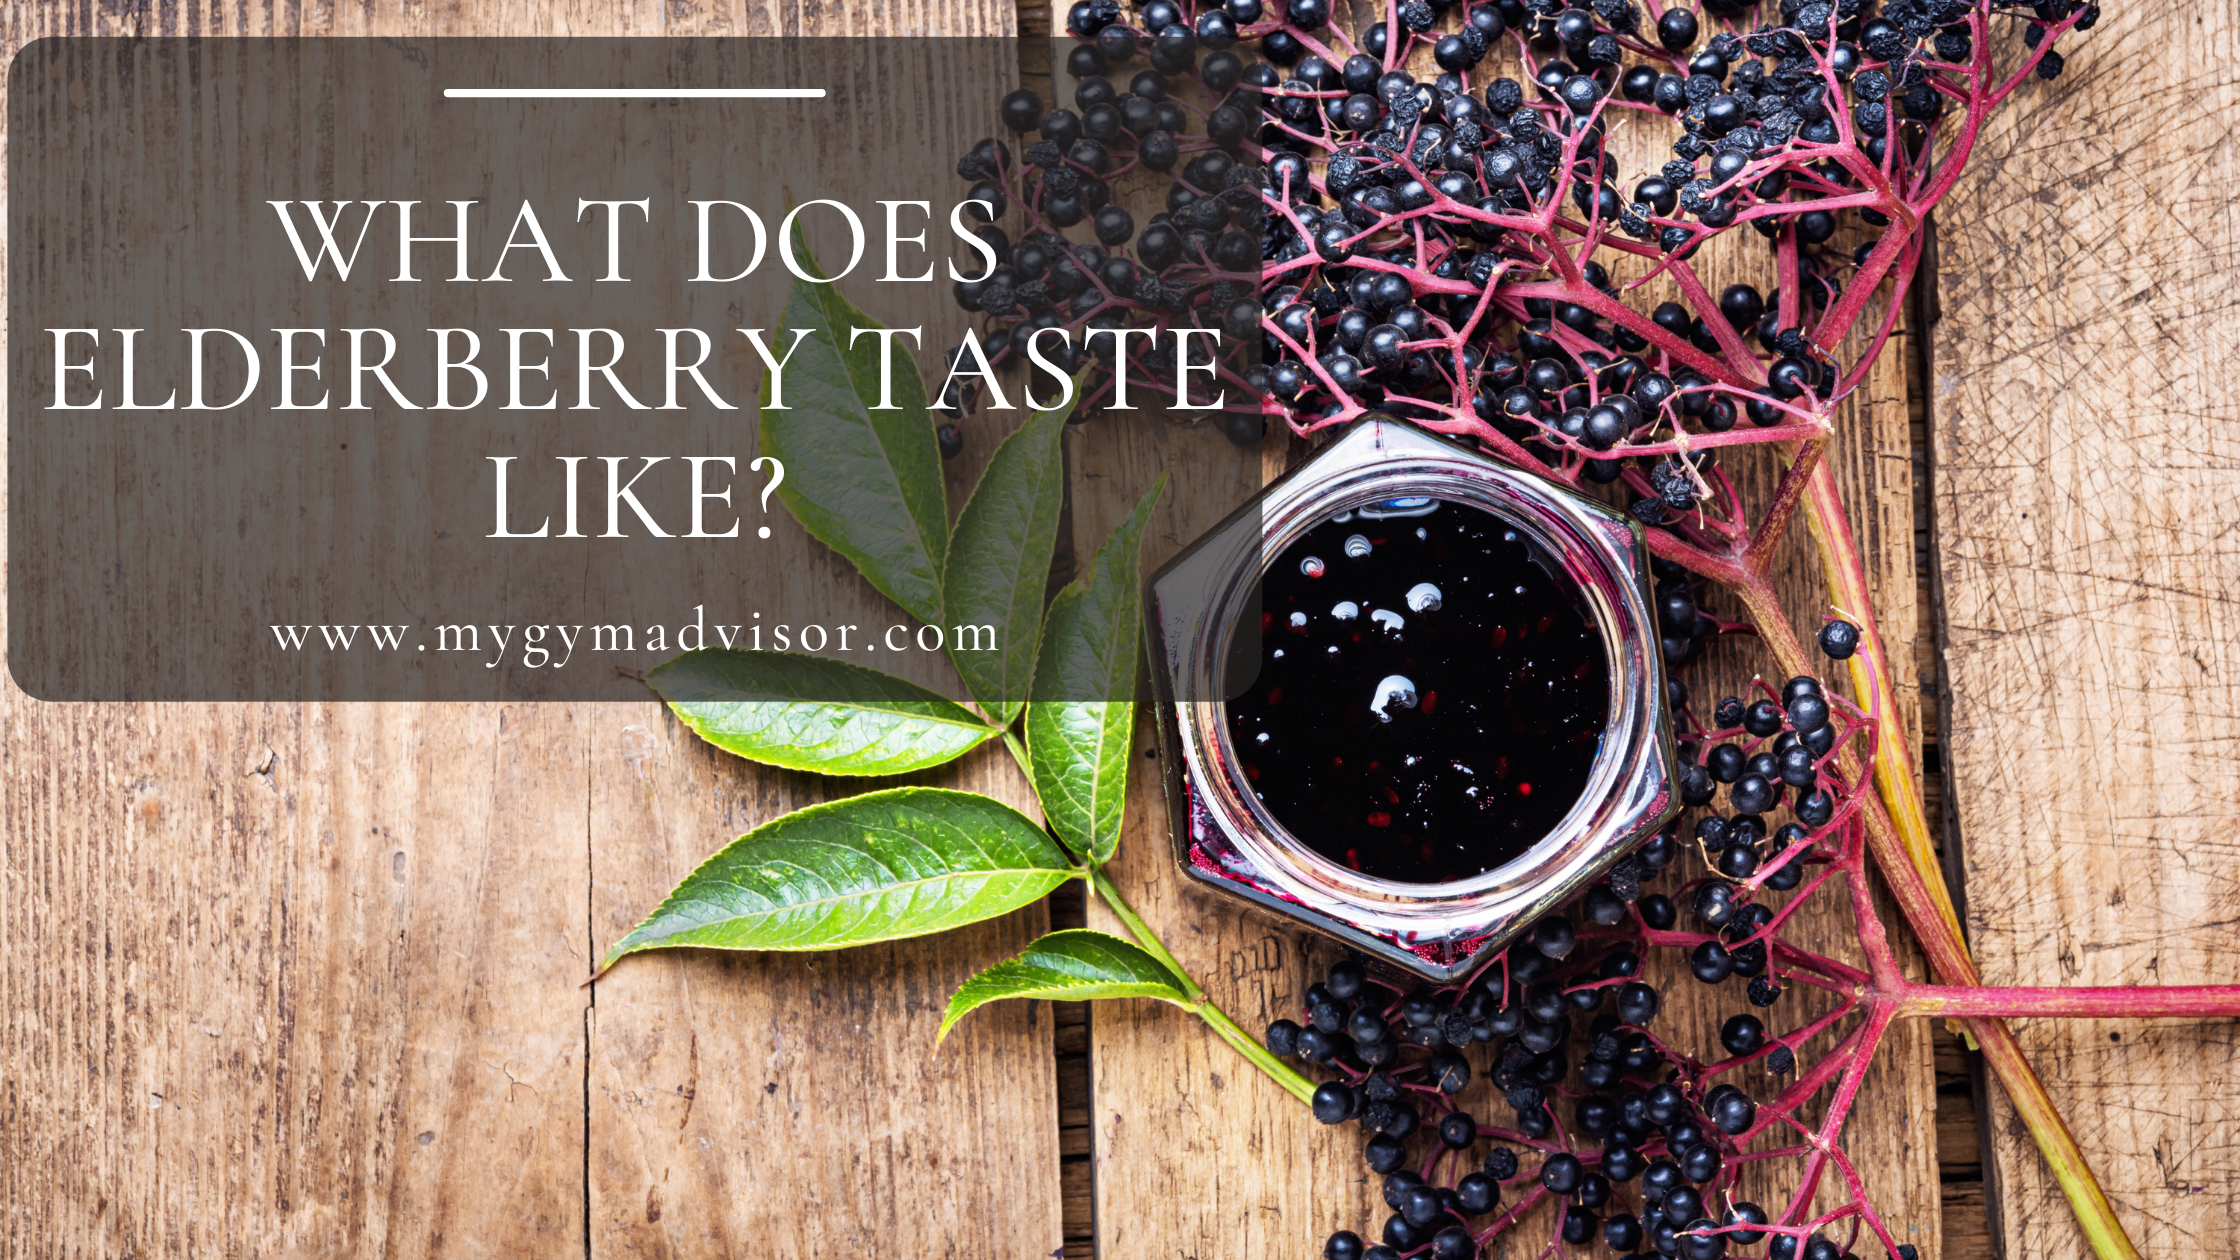 What does elderberry taste like?